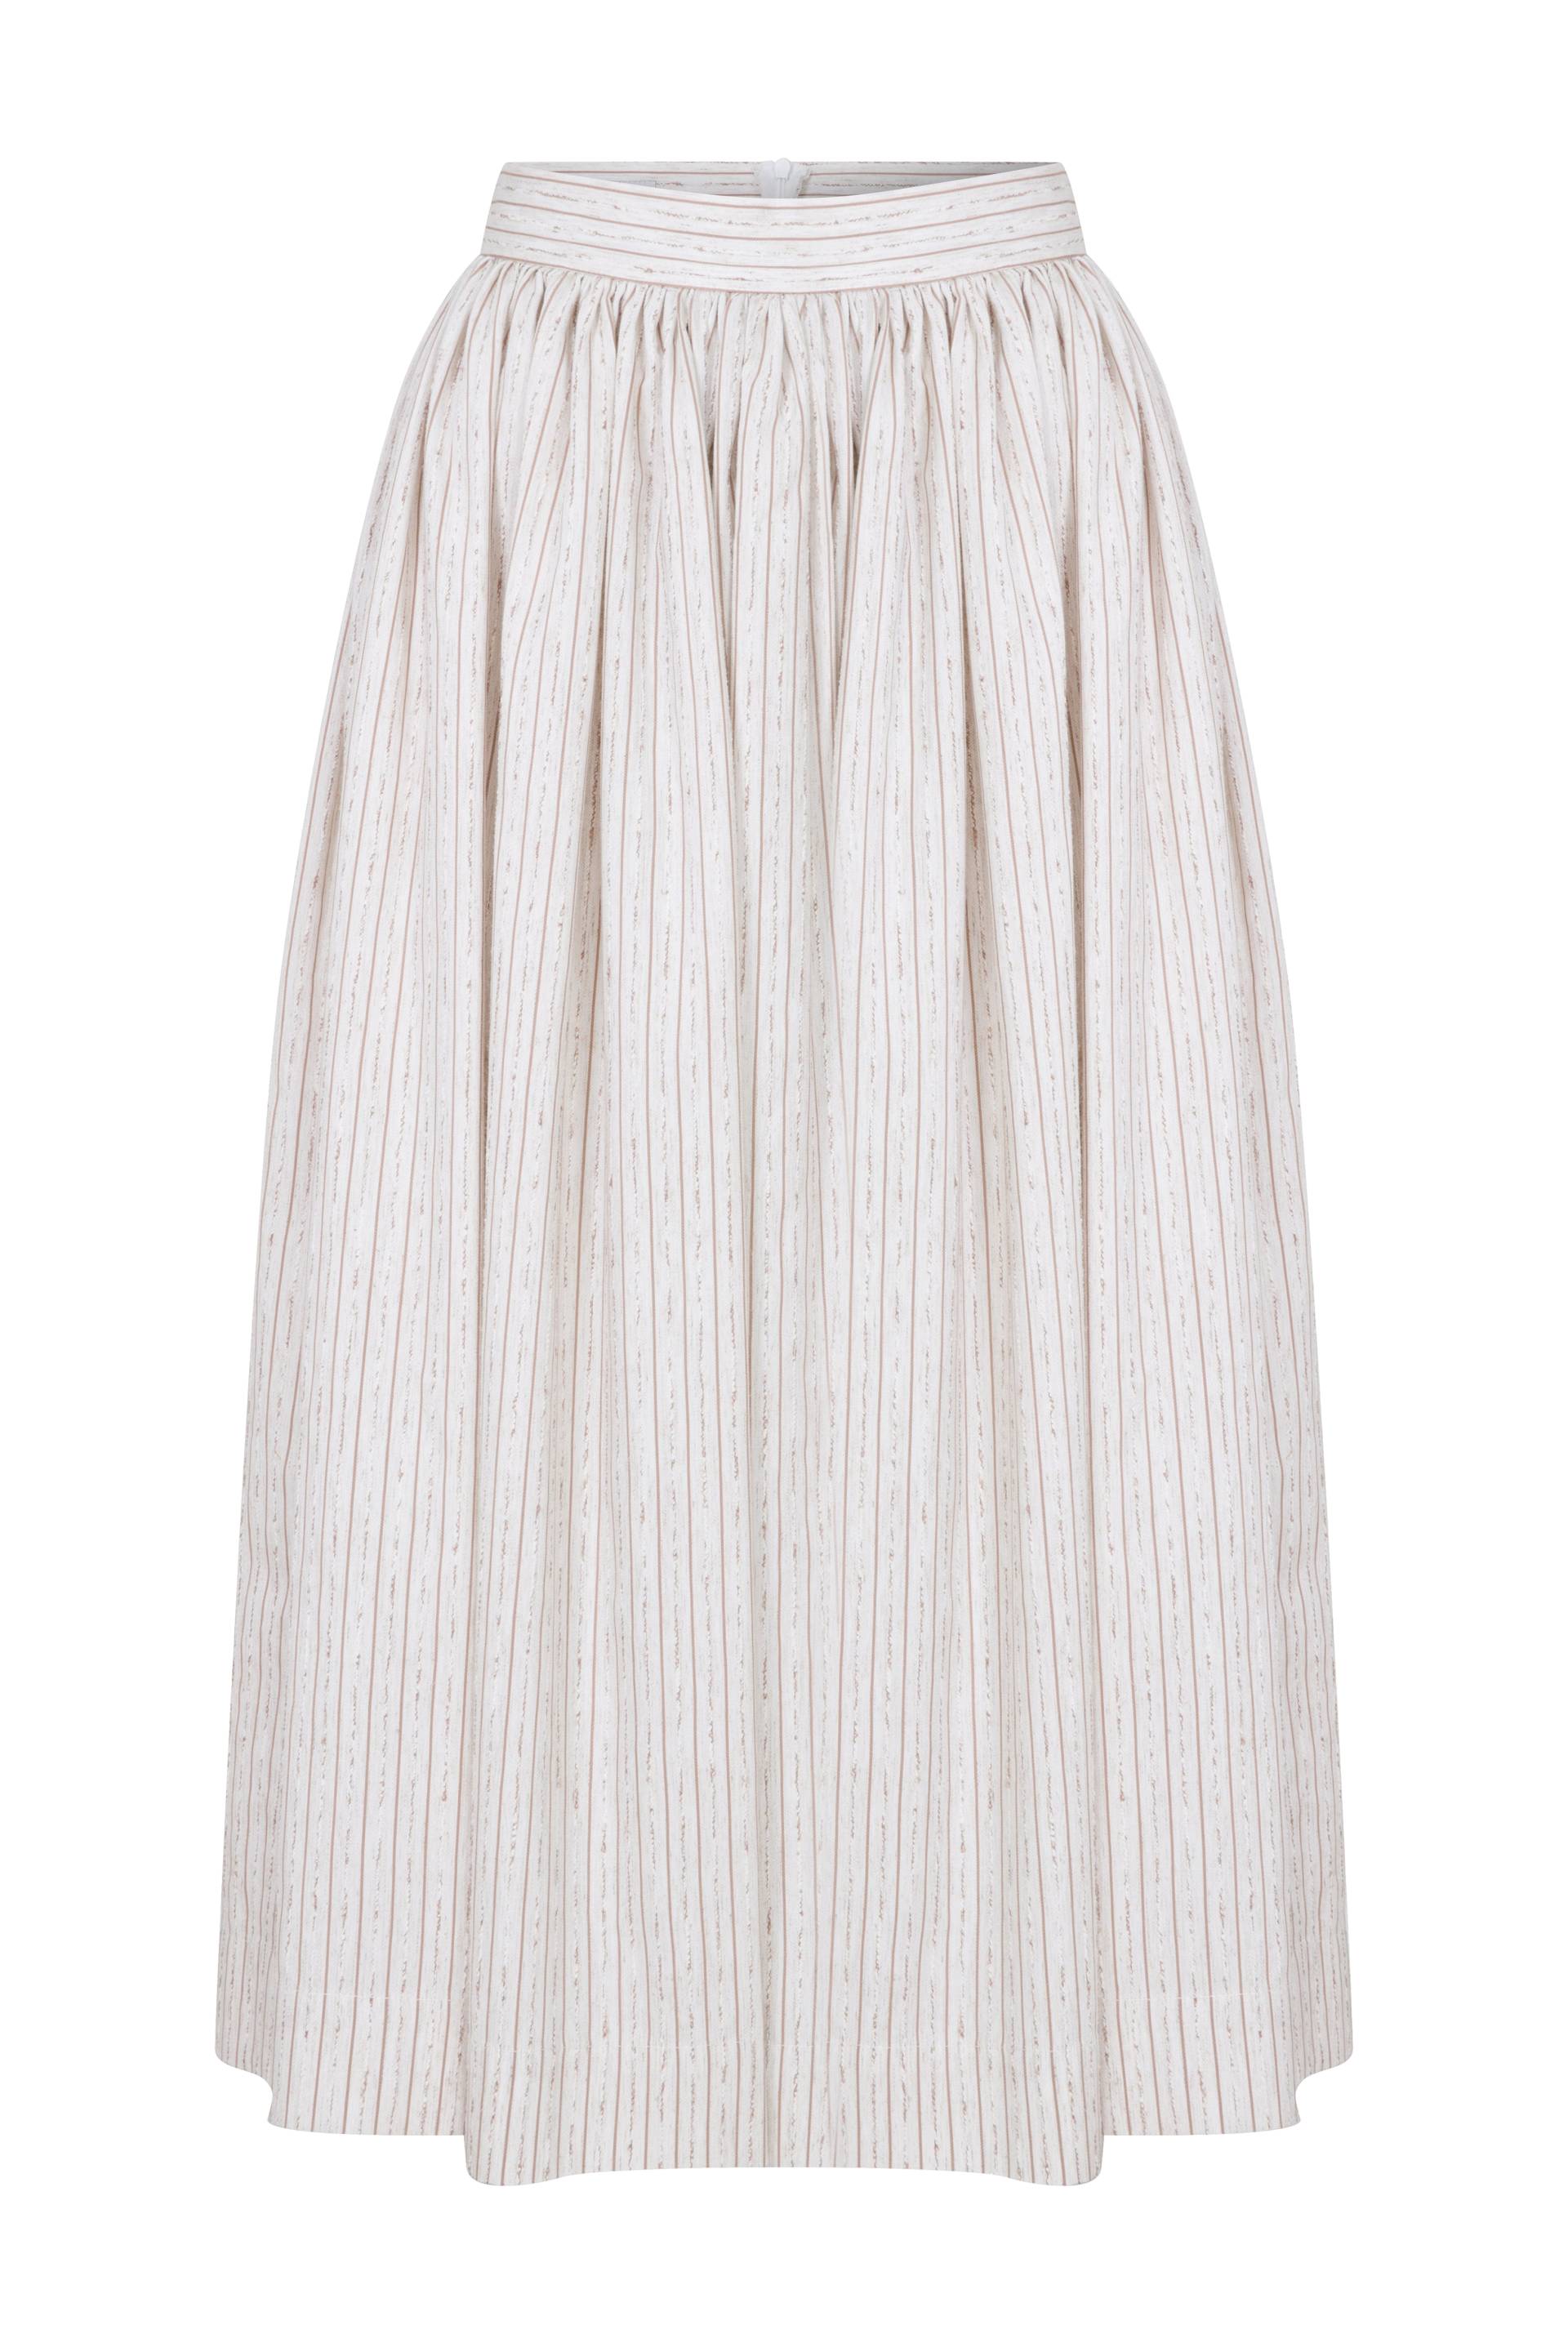 Lou Lou Striped Linen Midi Skirt in Walnut von Nazli Ceren